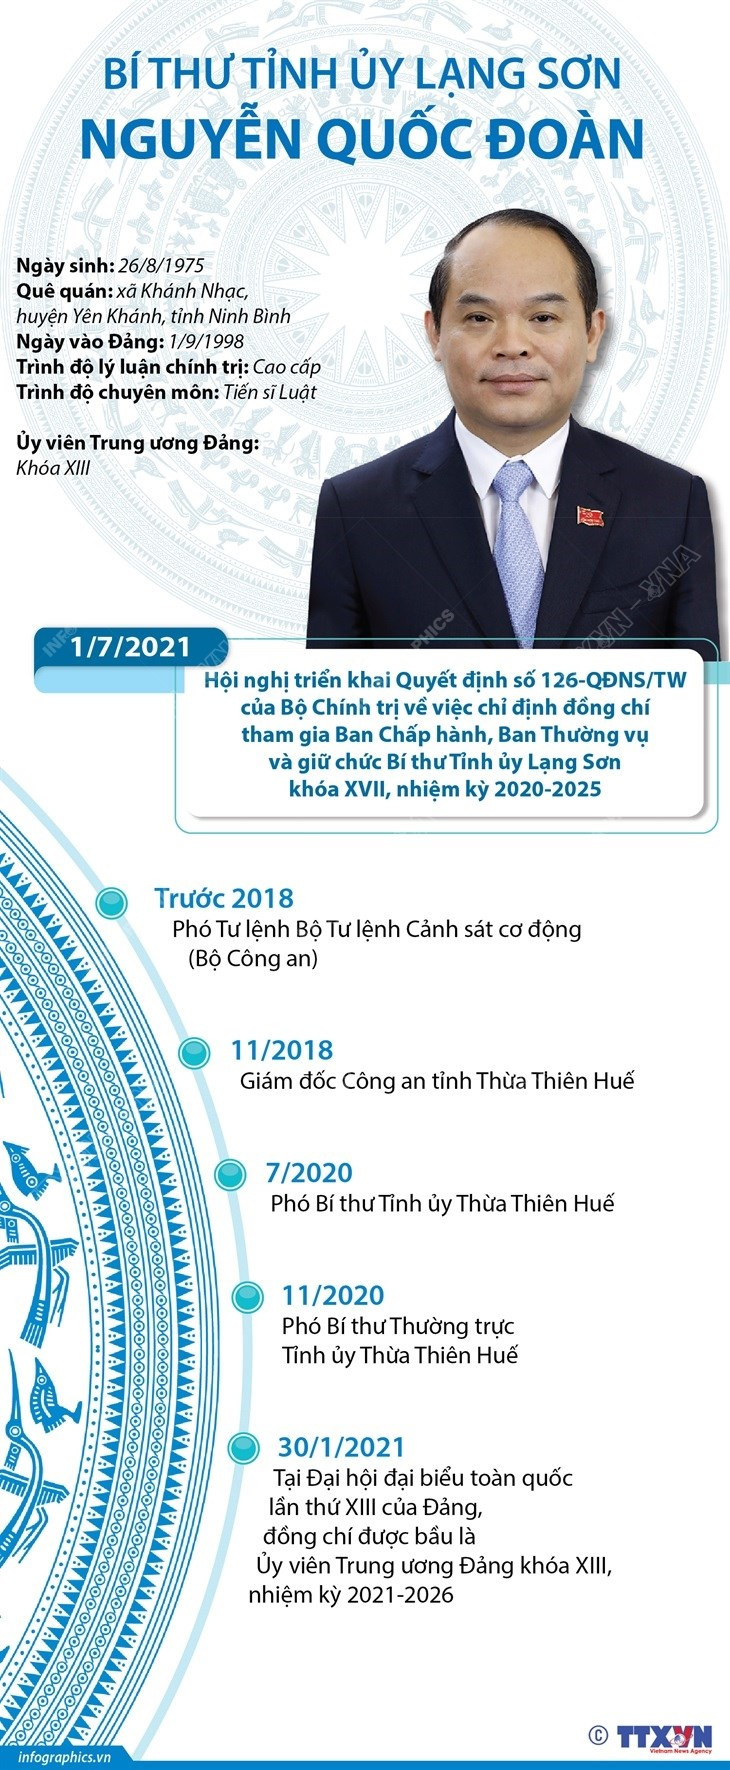 [Infographics] Bi thu Tinh uy Lang Son Nguyen Quoc Doan hinh anh 1